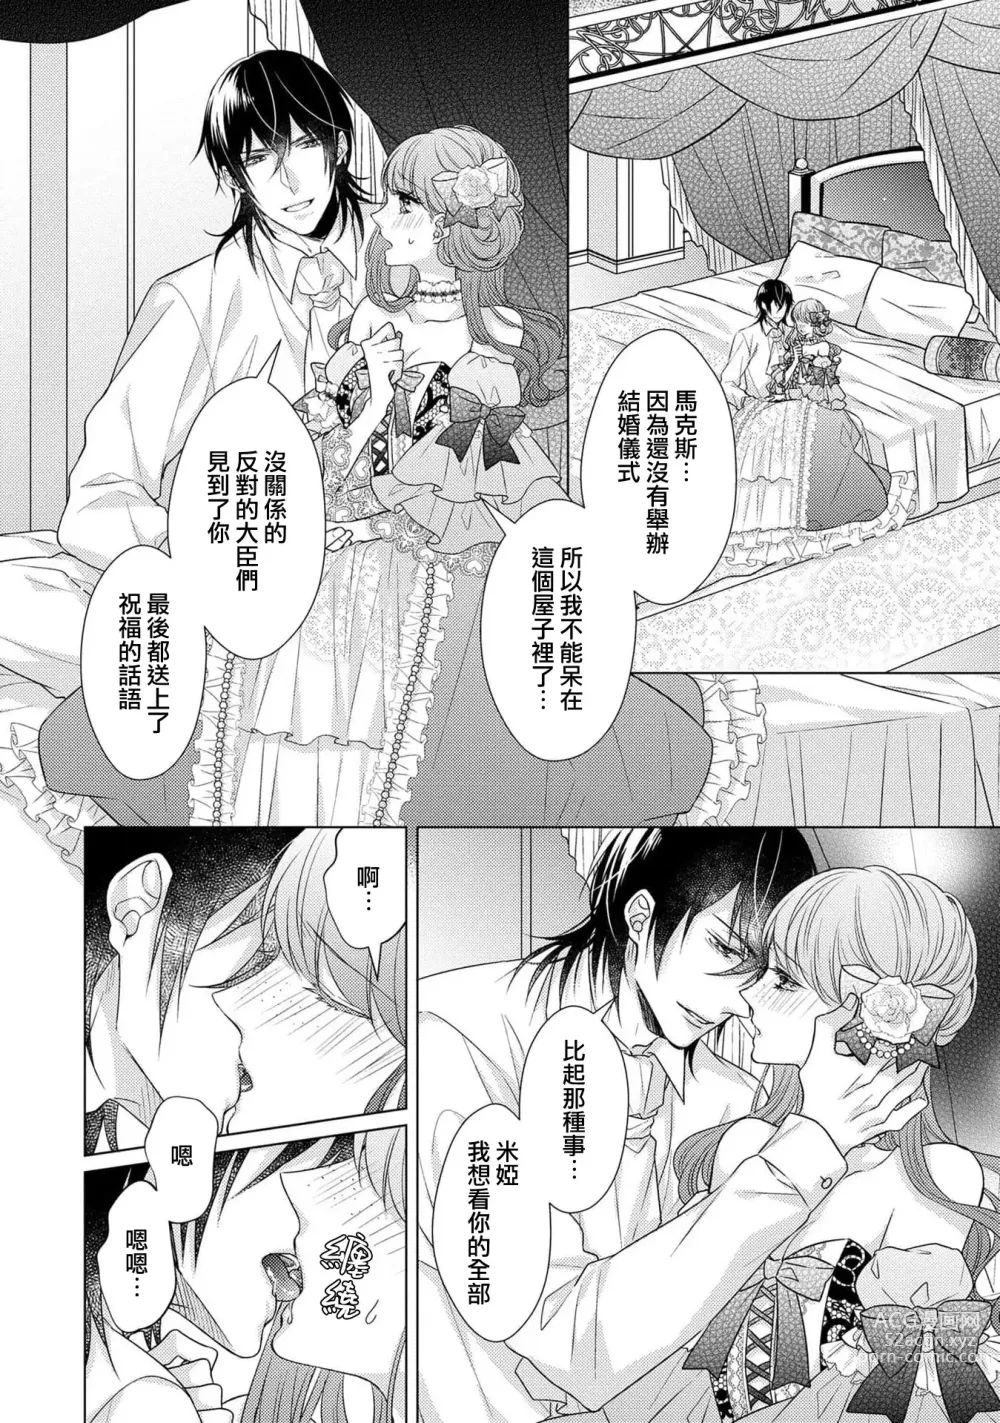 Page 160 of manga 宠爱王子和处女少女~30岁还是处女，这一次和真壁社长签订了炮友契约~ 1-5 end